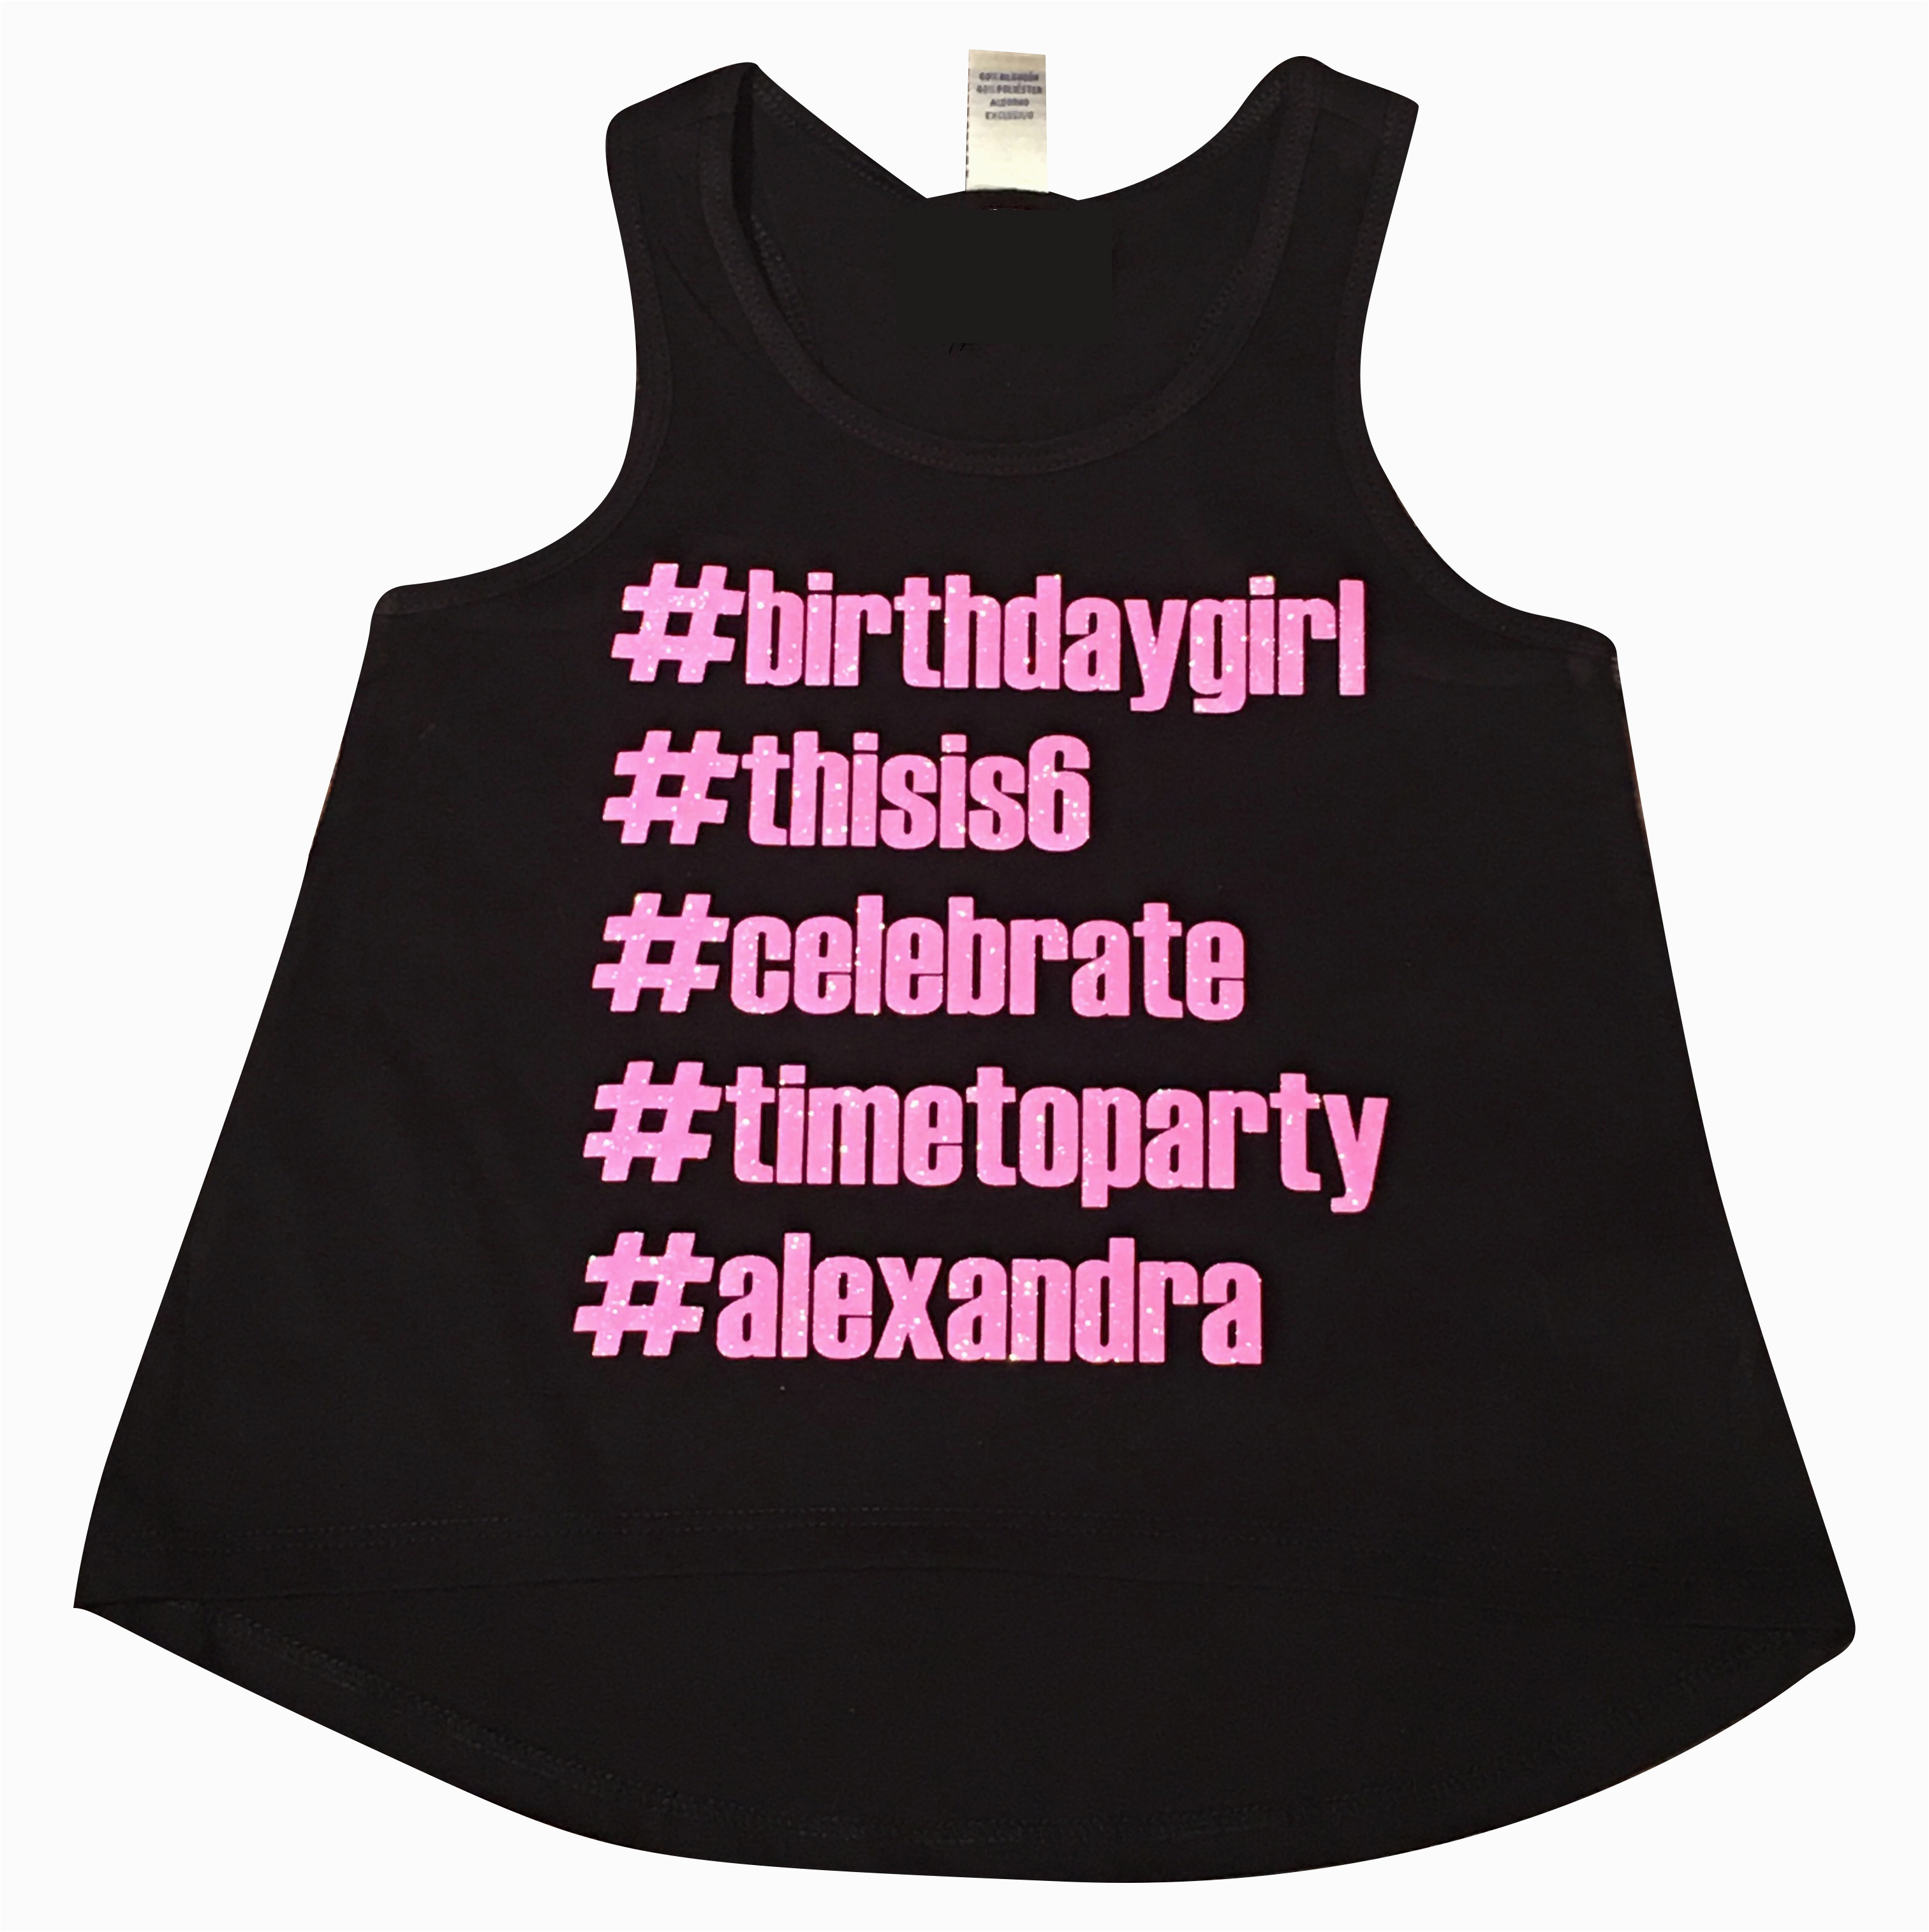 hashtag birthday shirt p 298